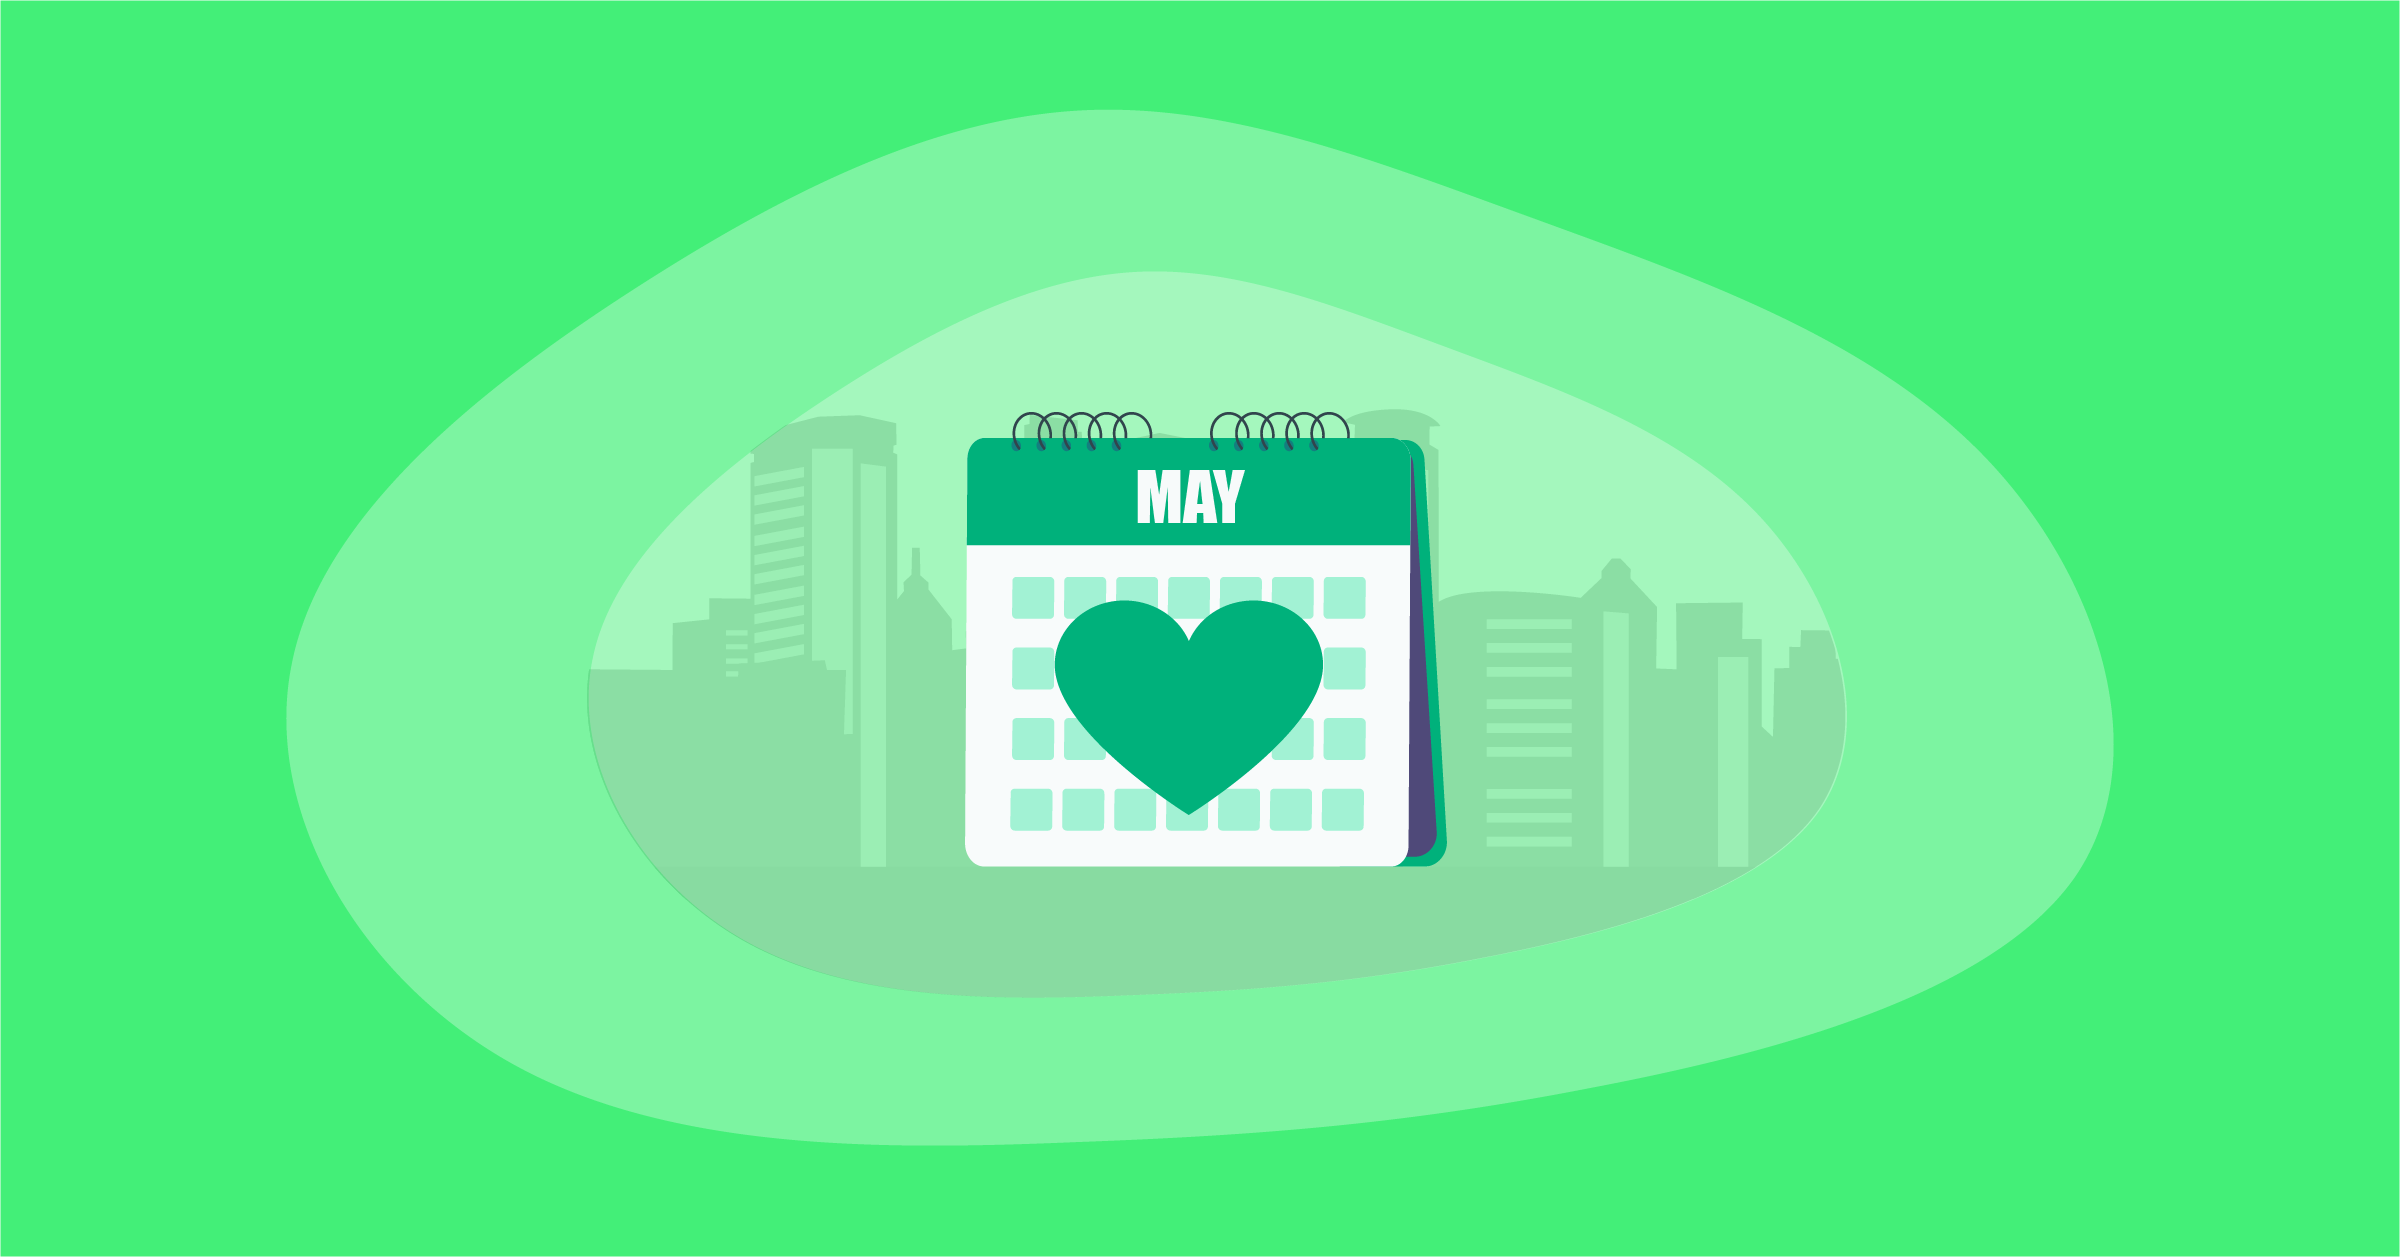 Illustration of an awareness calendar for May